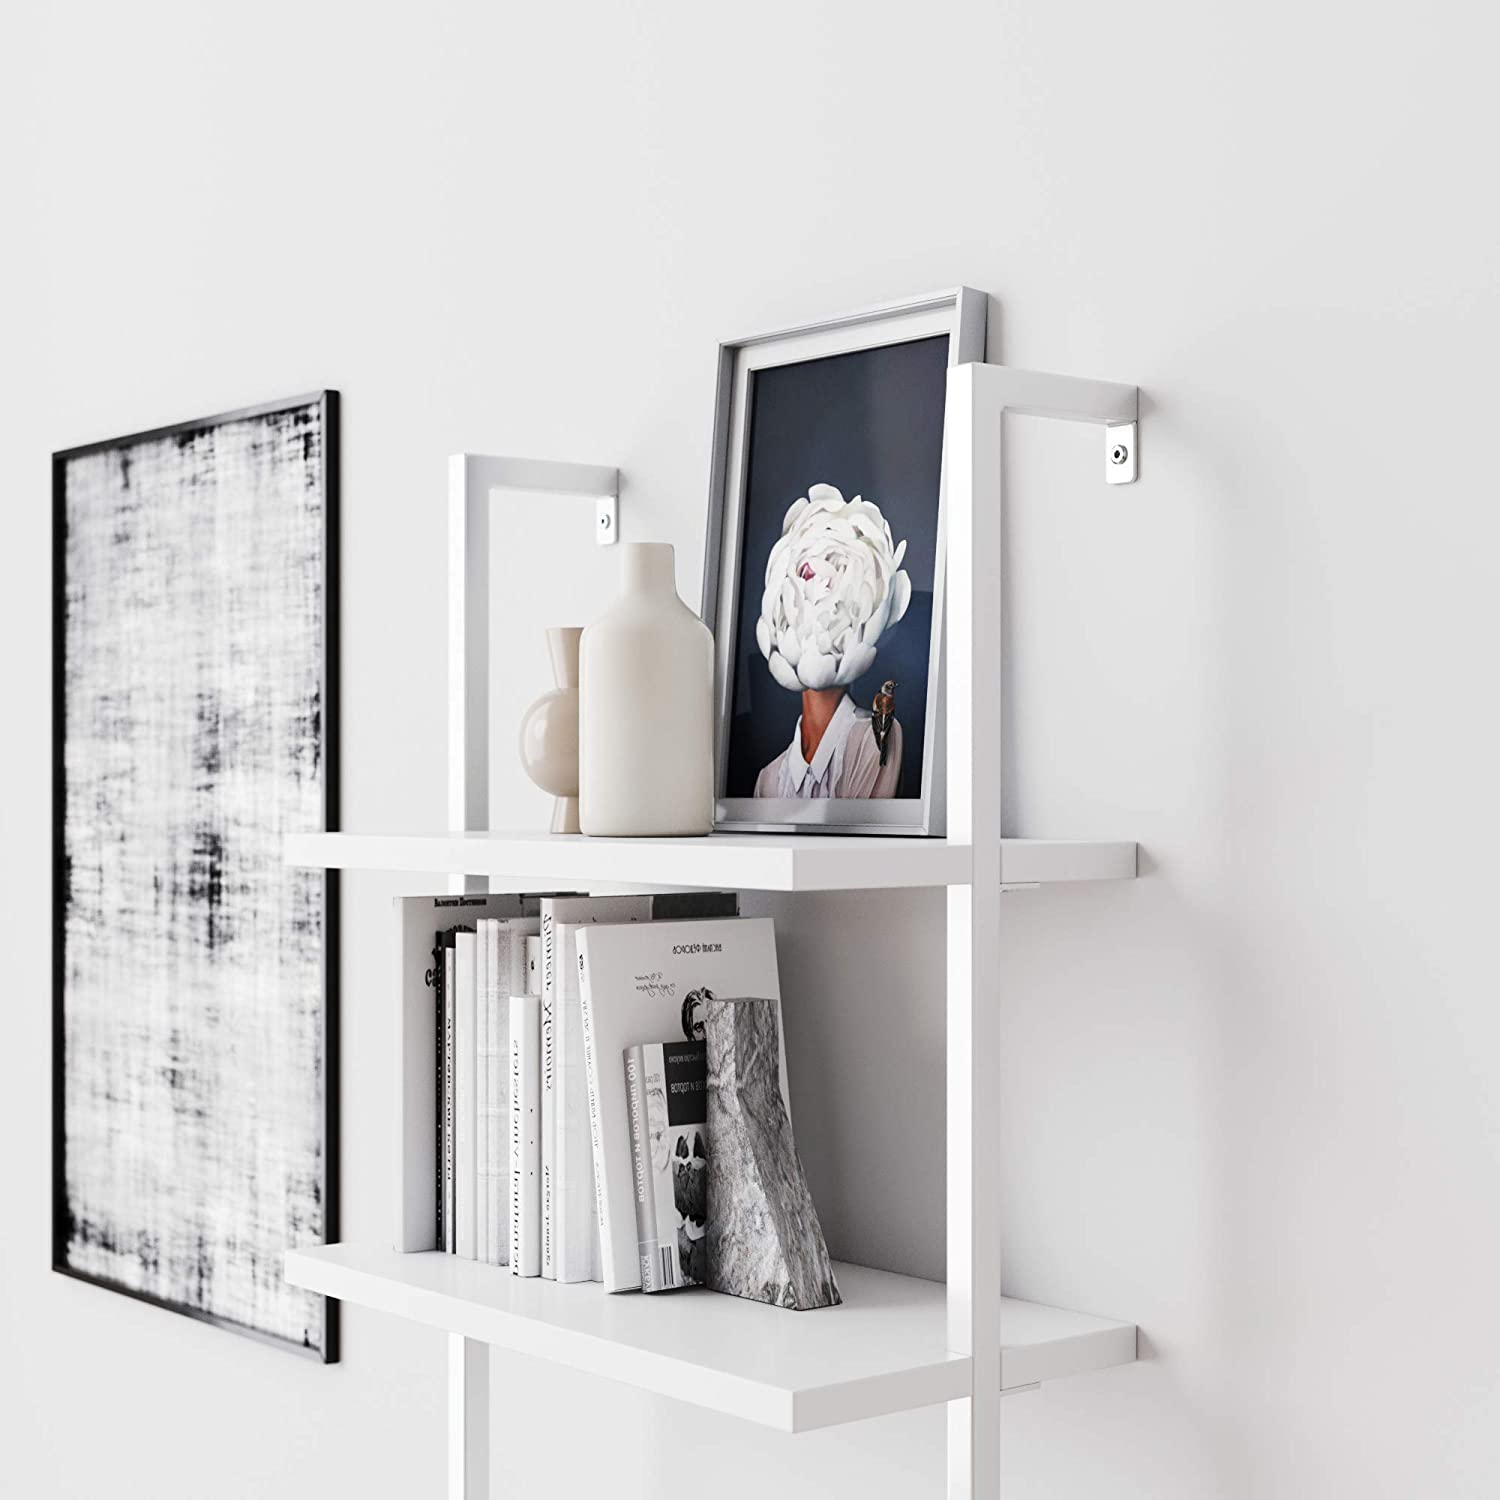 Bookshelf: 5-Shelf Oak Wood Modern Bookcase, Black Metal Frame 